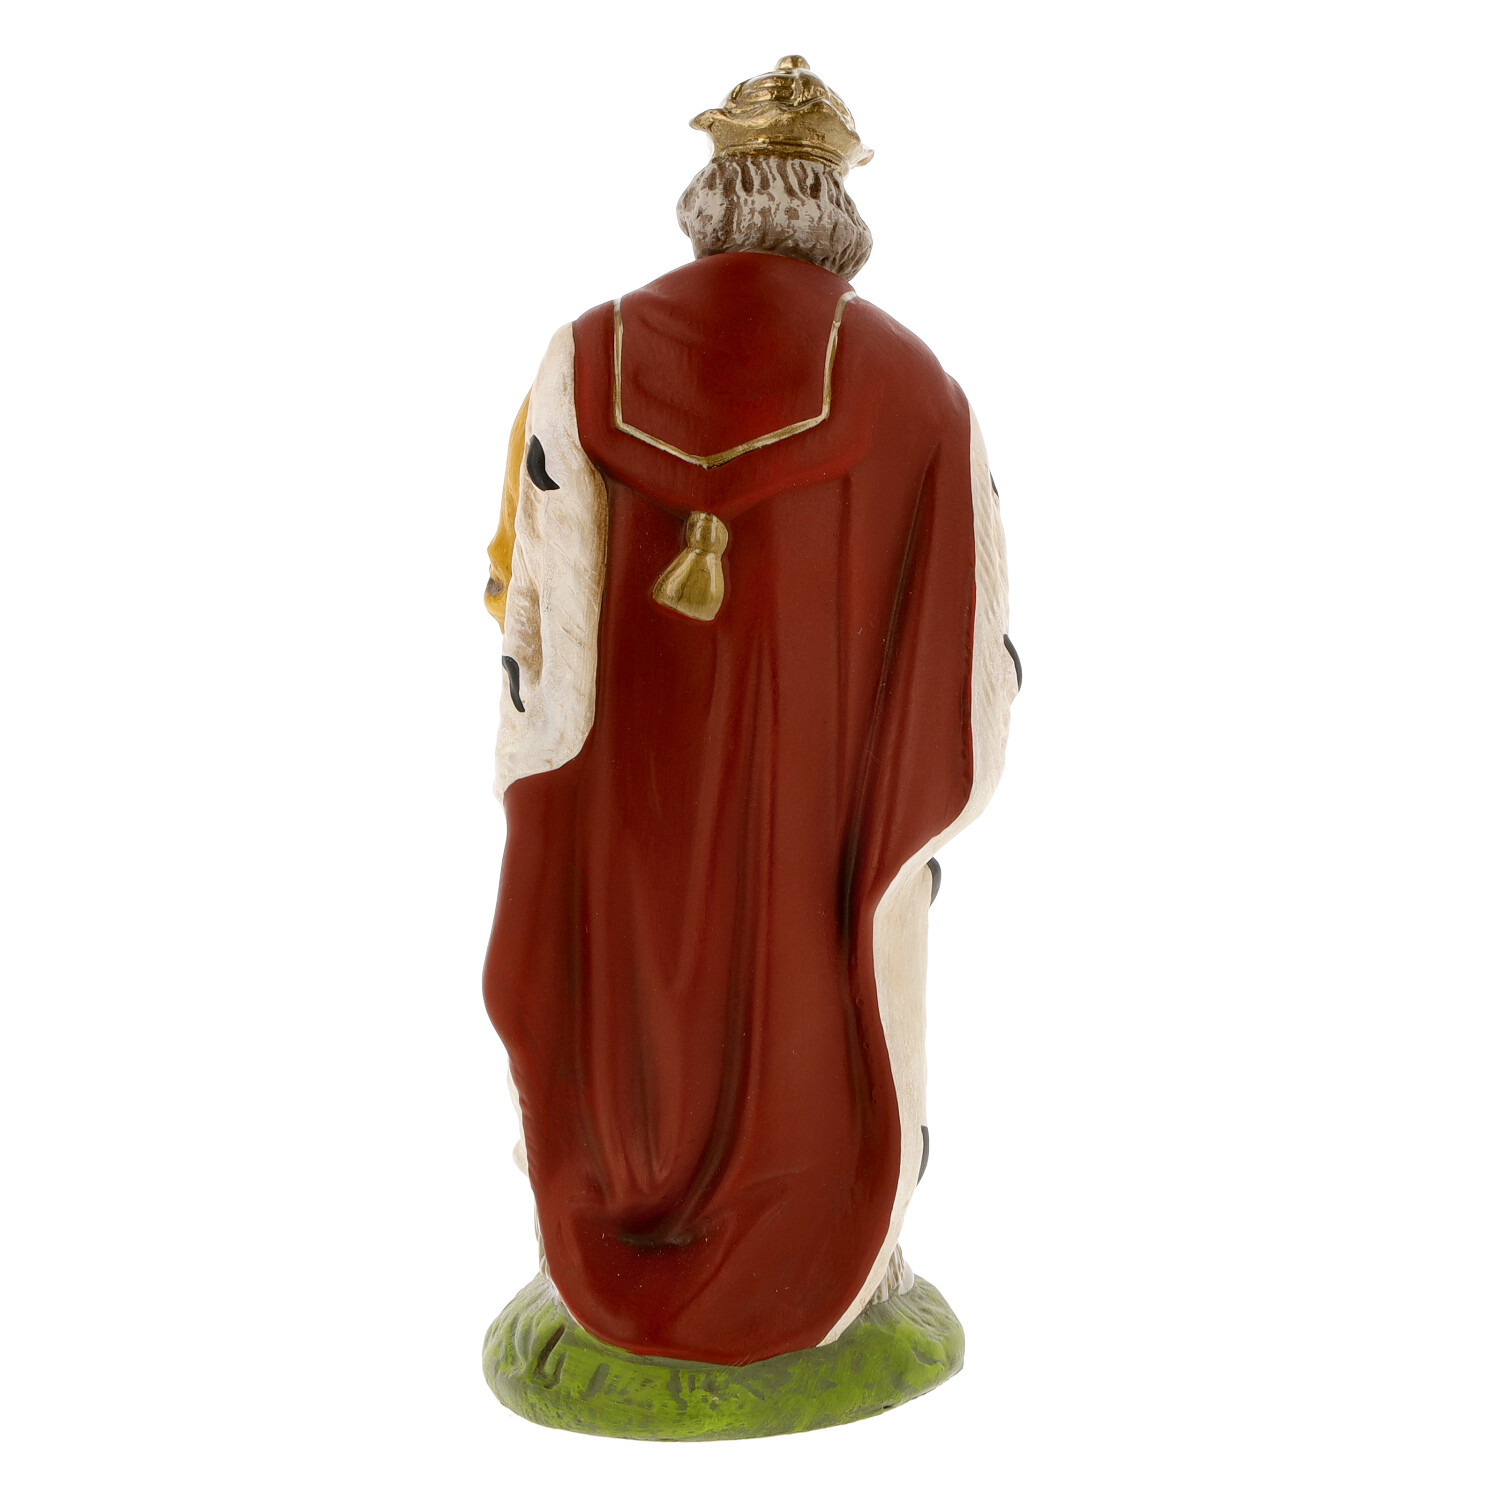 White King - Marolin Nativity figure - made in Germany